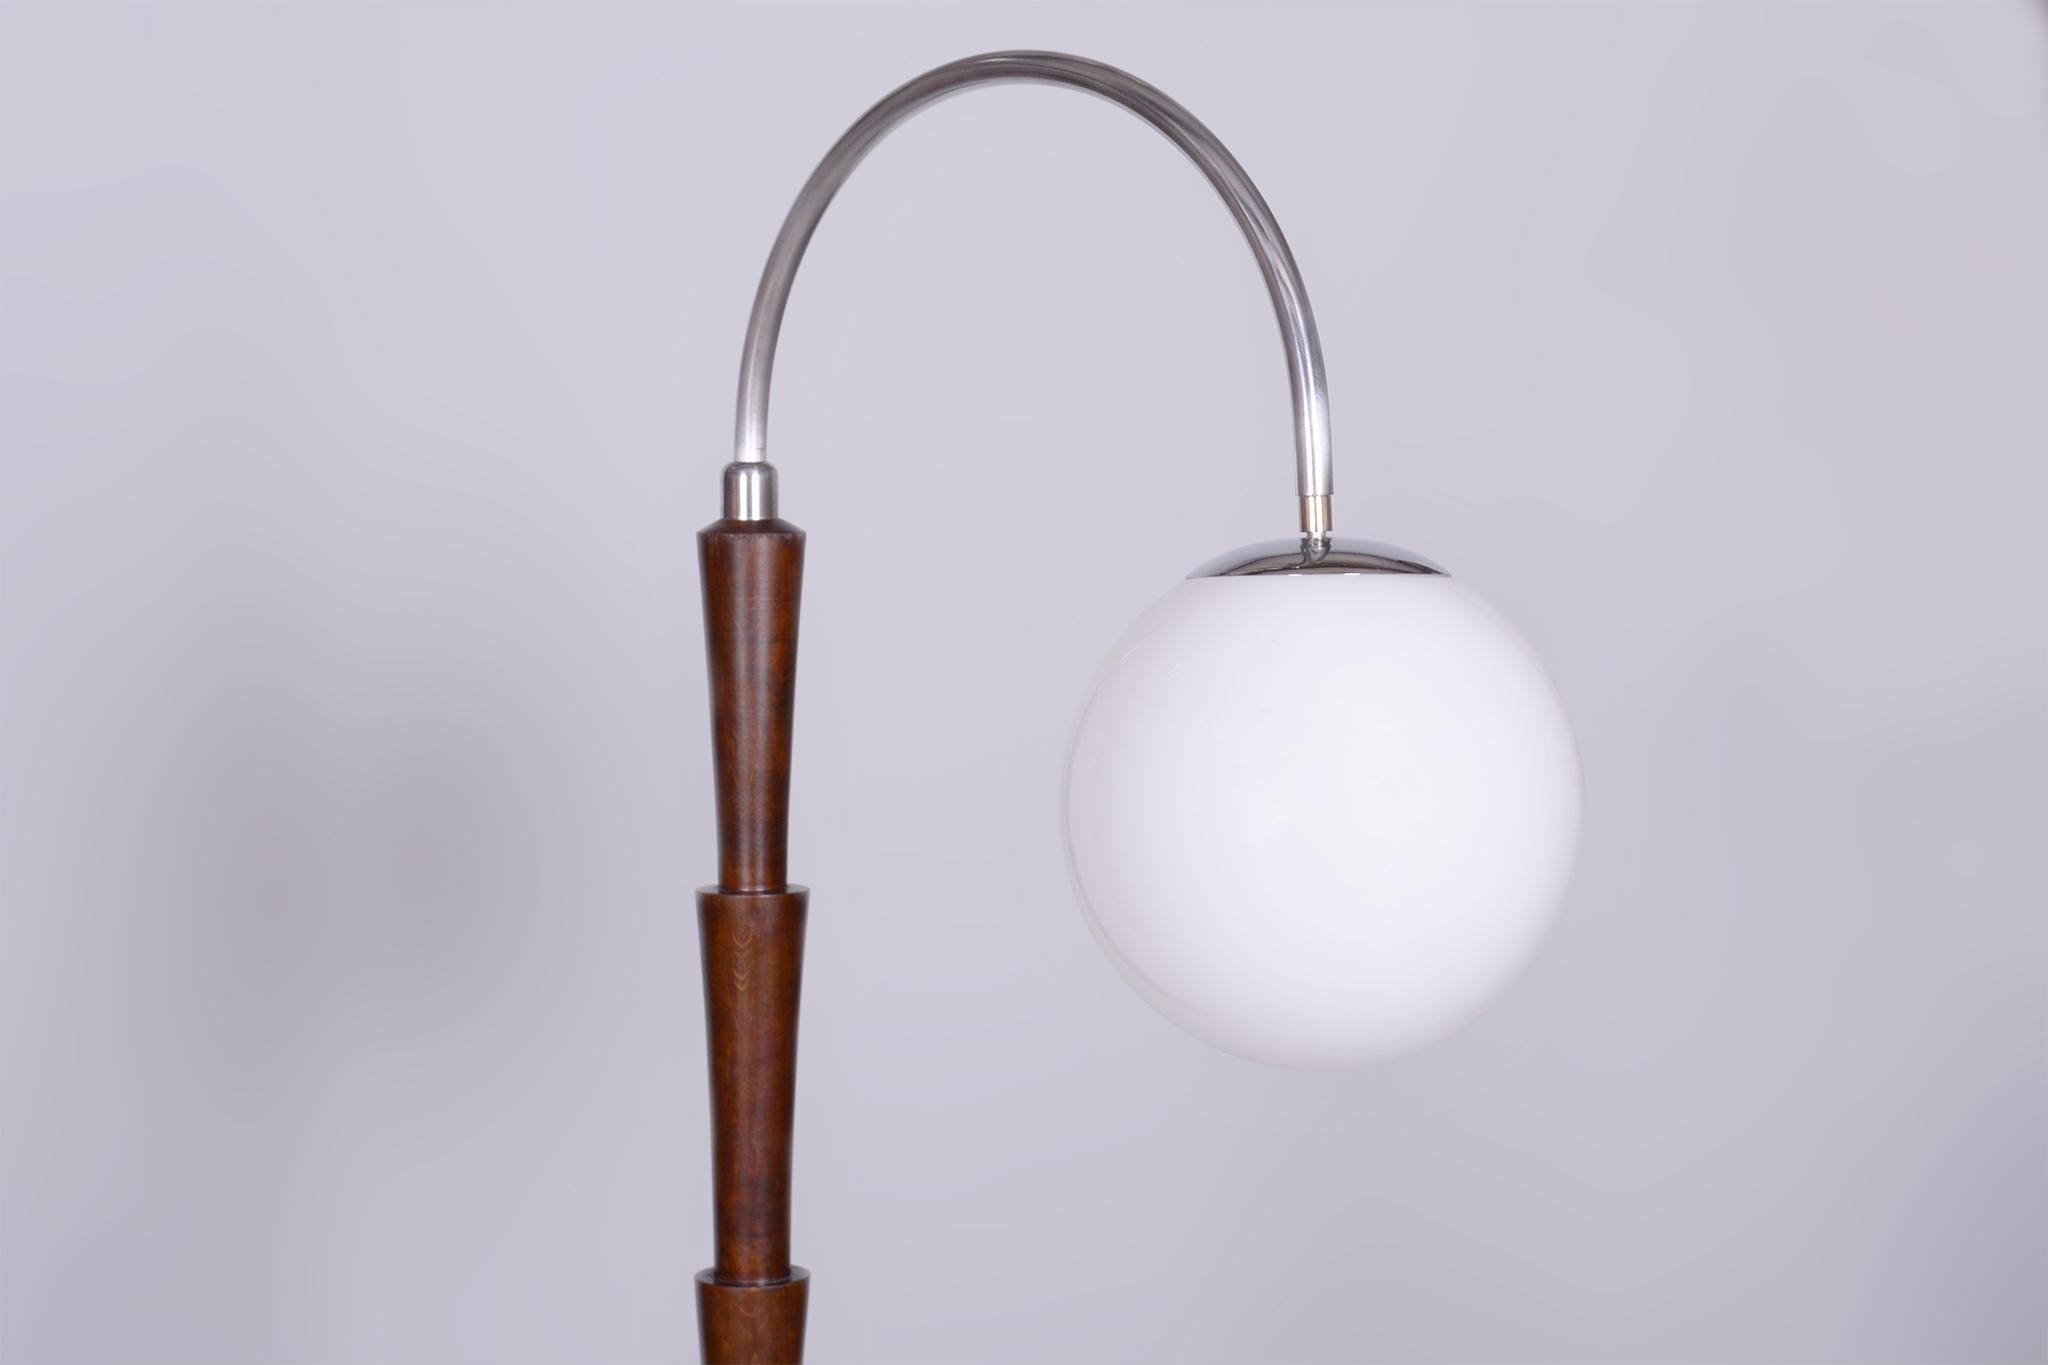 Restored Czech Cubism Floor Lamp, Beech, Chrome-plated Steel, Czechia, 1920s For Sale 1